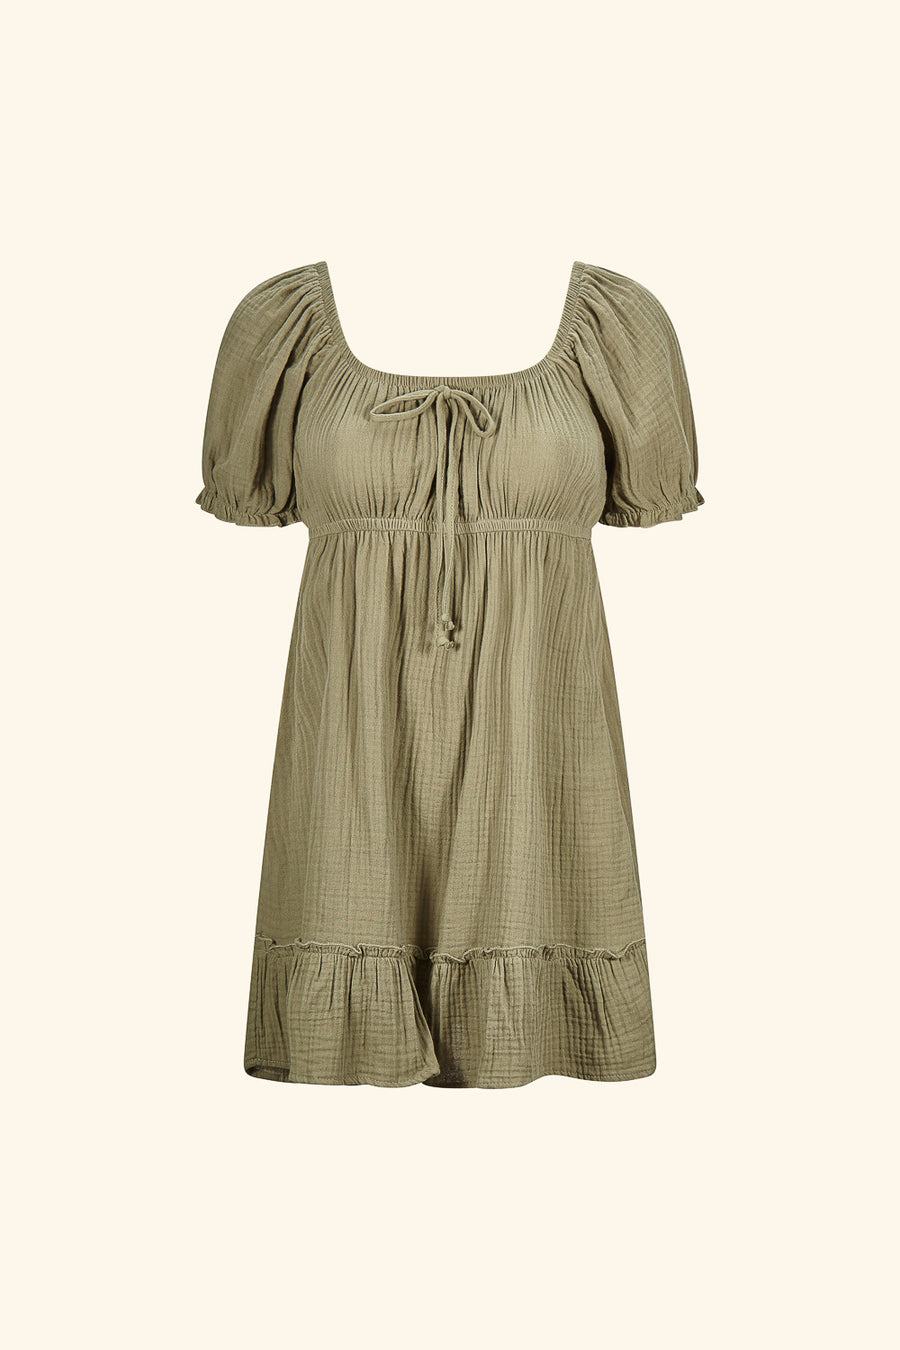 Olive Cotton Babydoll Dress - Trixxi Clothing